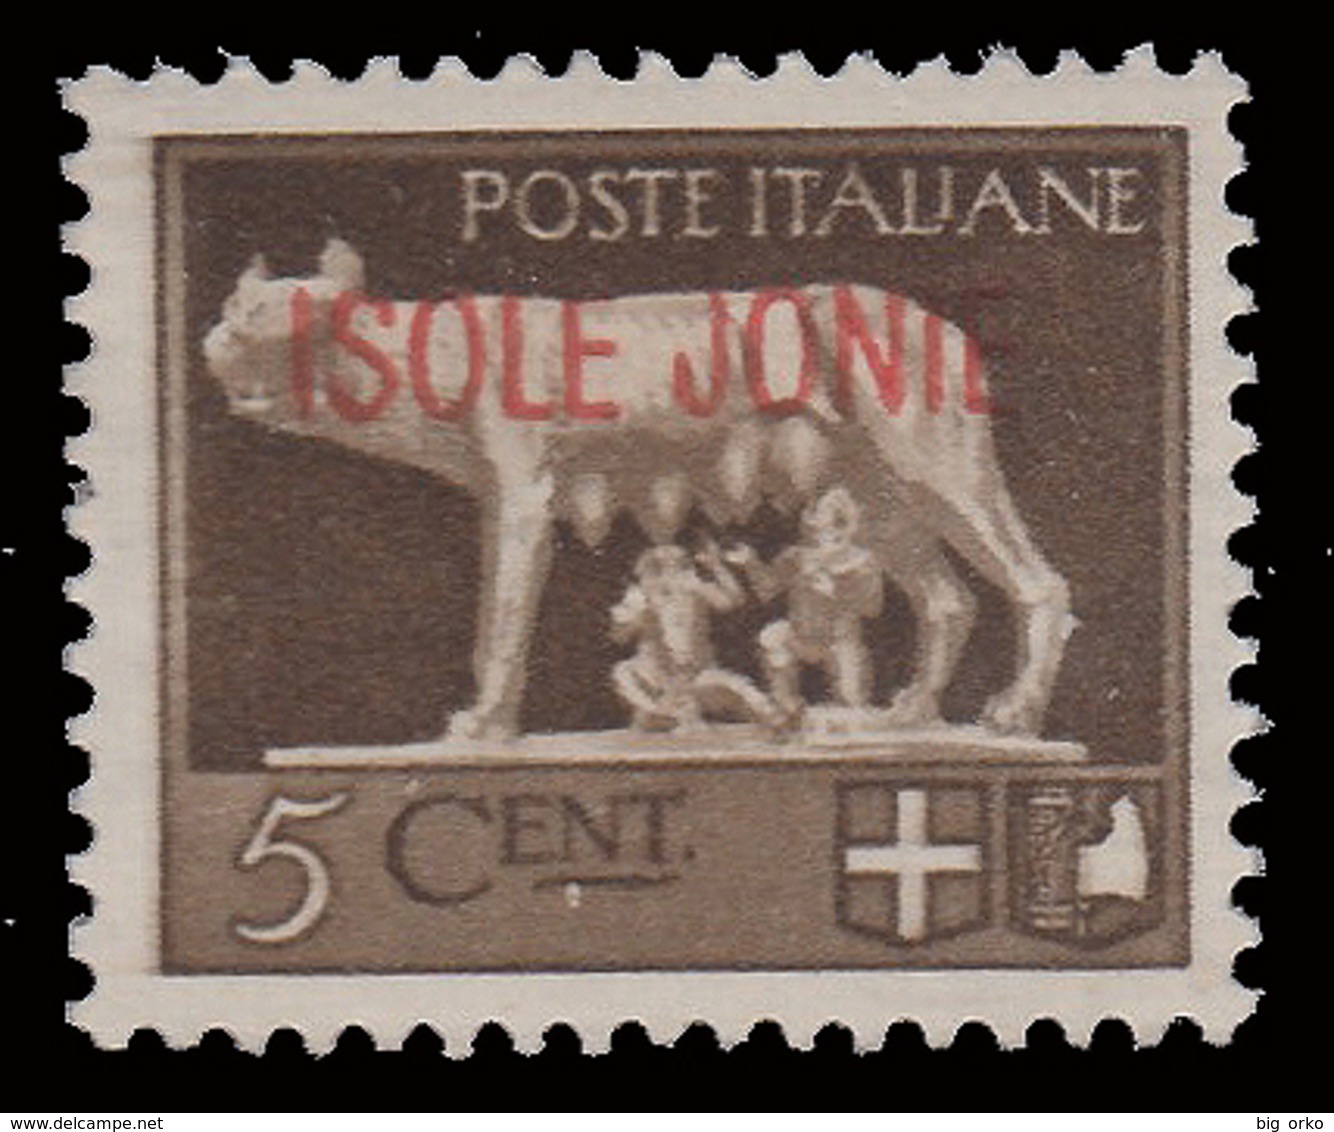 ITALIA - ISOLE JONIE (Emissioni Generali) - 5 C. Bruno - 1941 - Ionische Eilanden